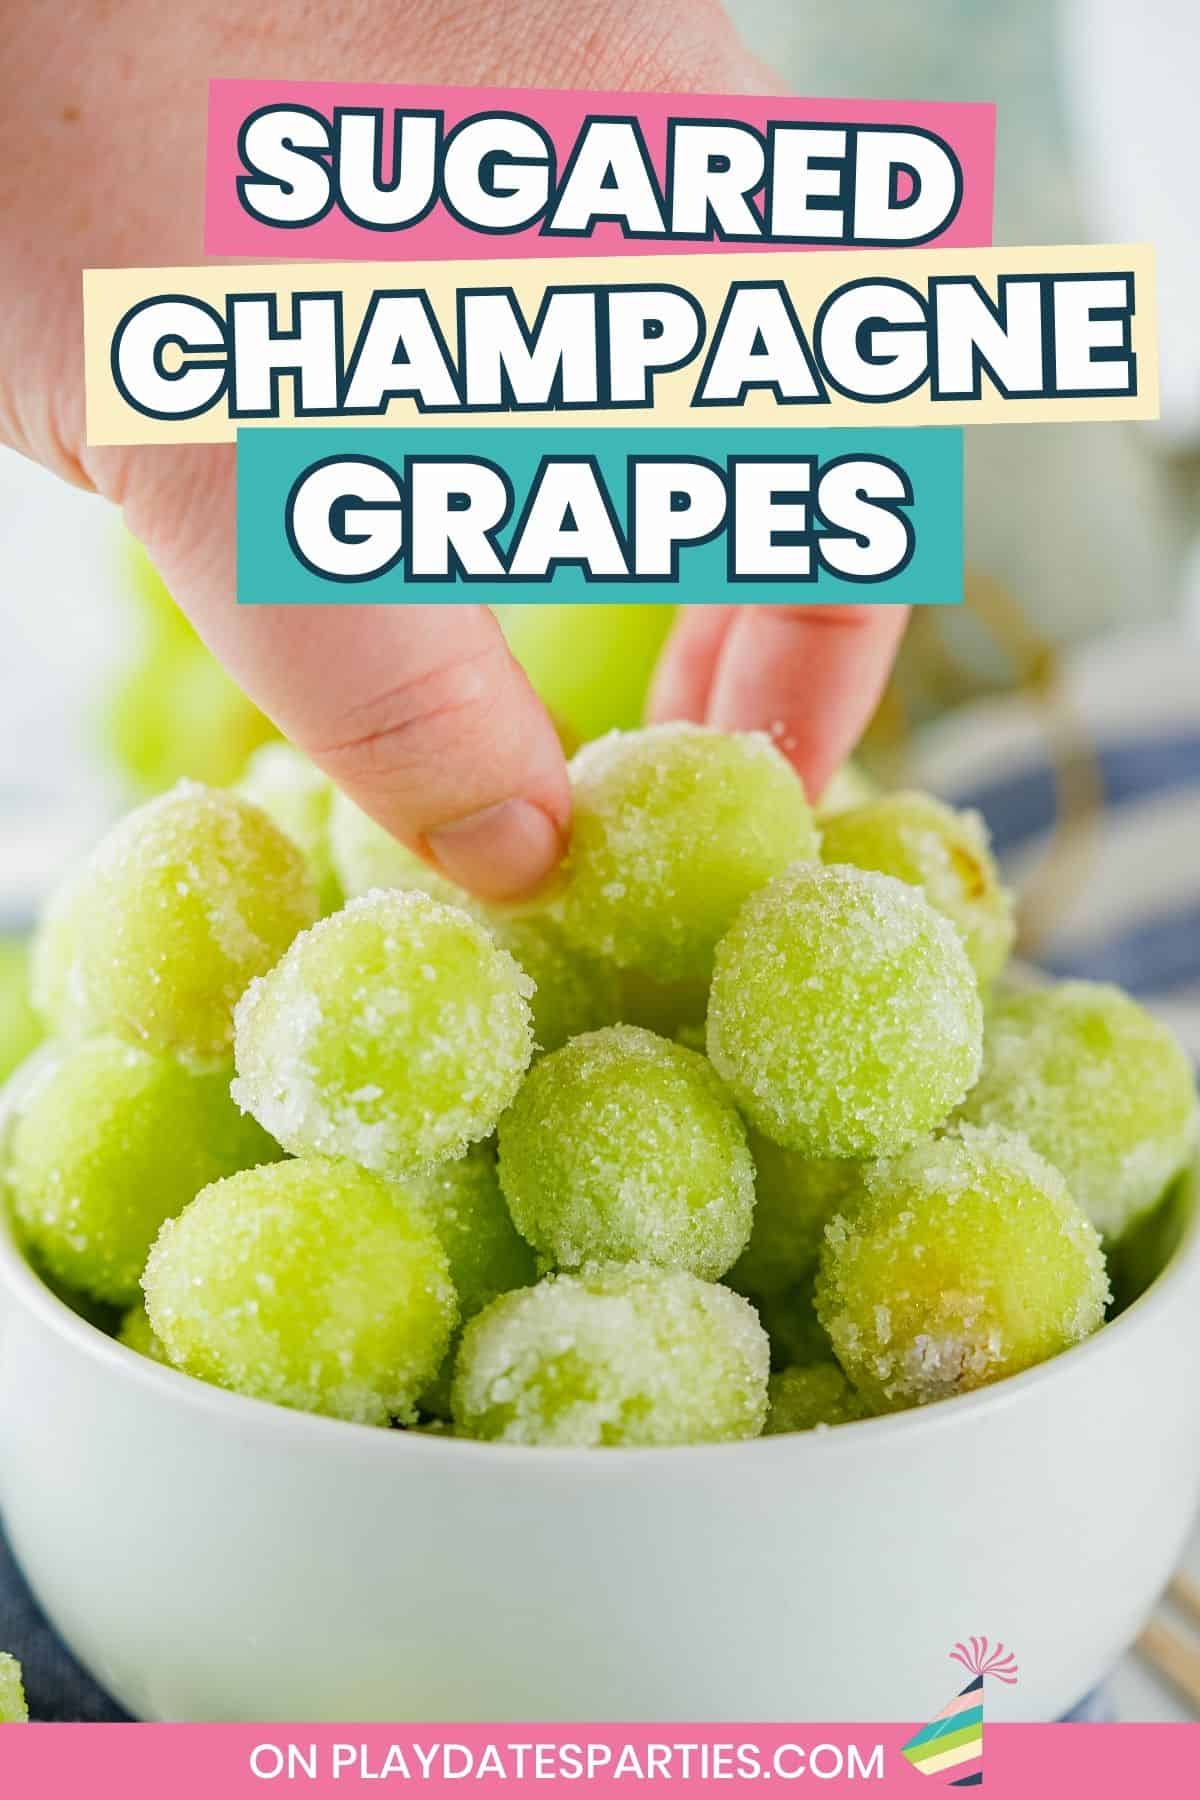 Sugared Champagne Grapes pin image.